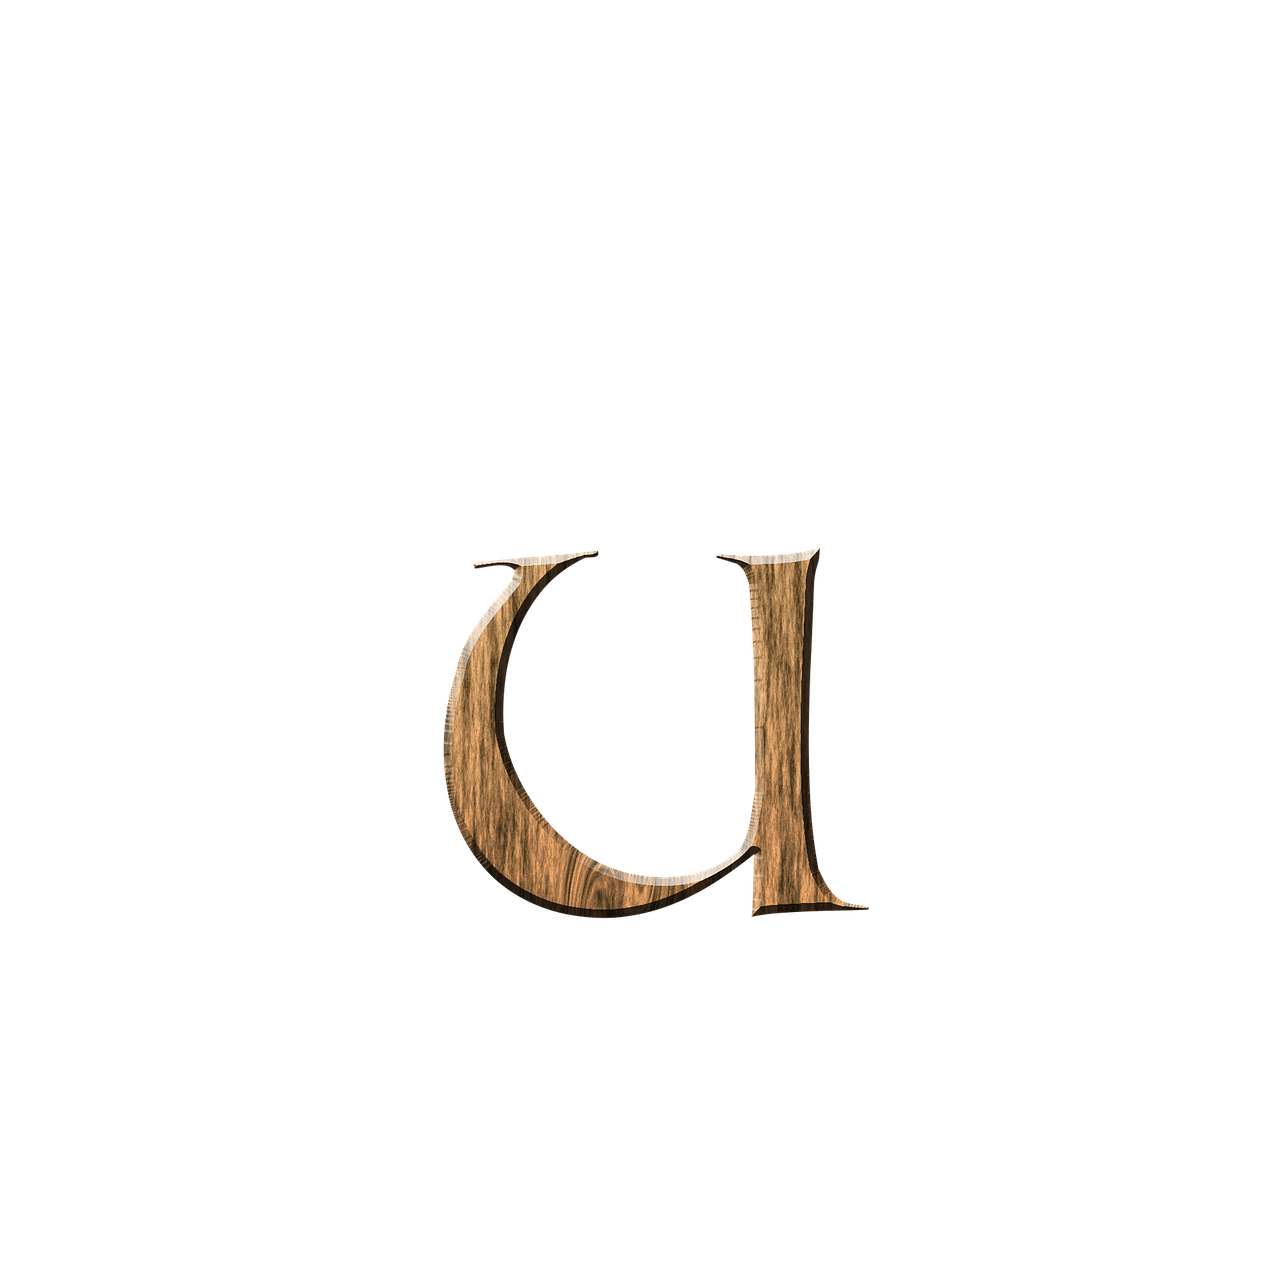 wooden-u-u-letter-letter-u-wooden-free-image-from-needpix